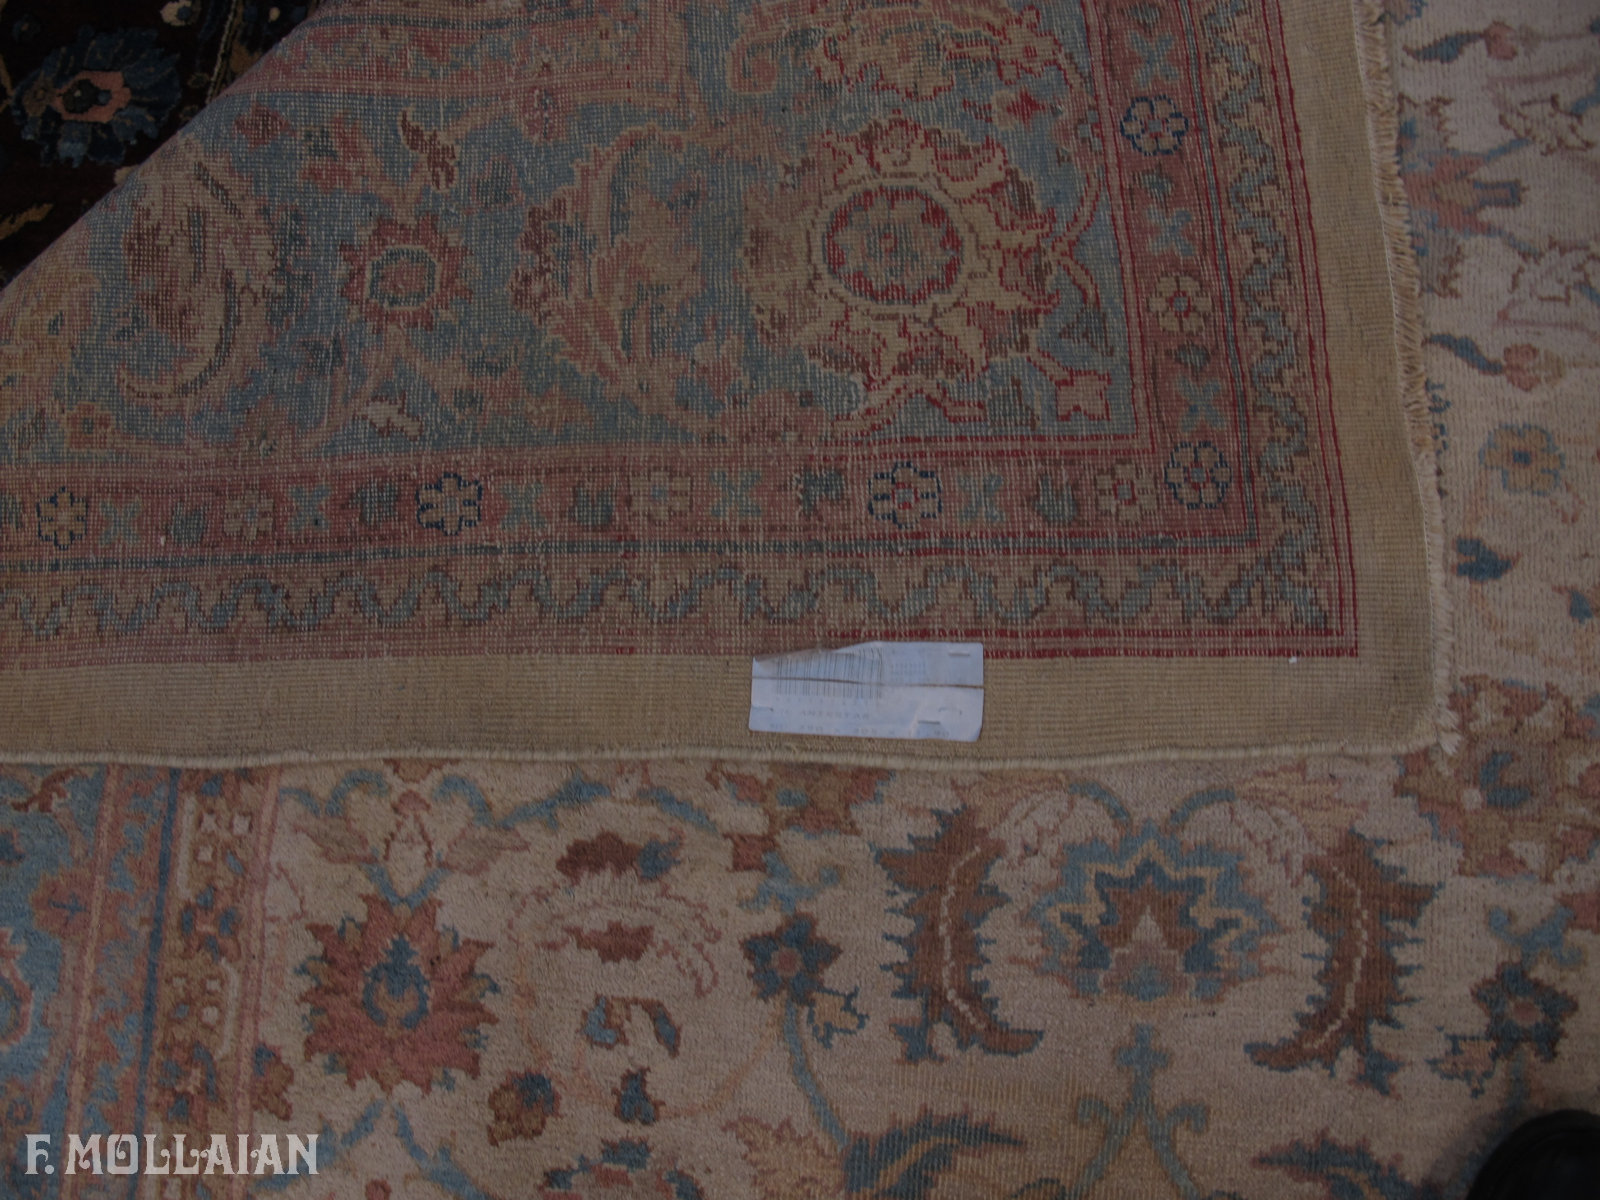 Antique Indian Amirstar Carpet n°:61385481